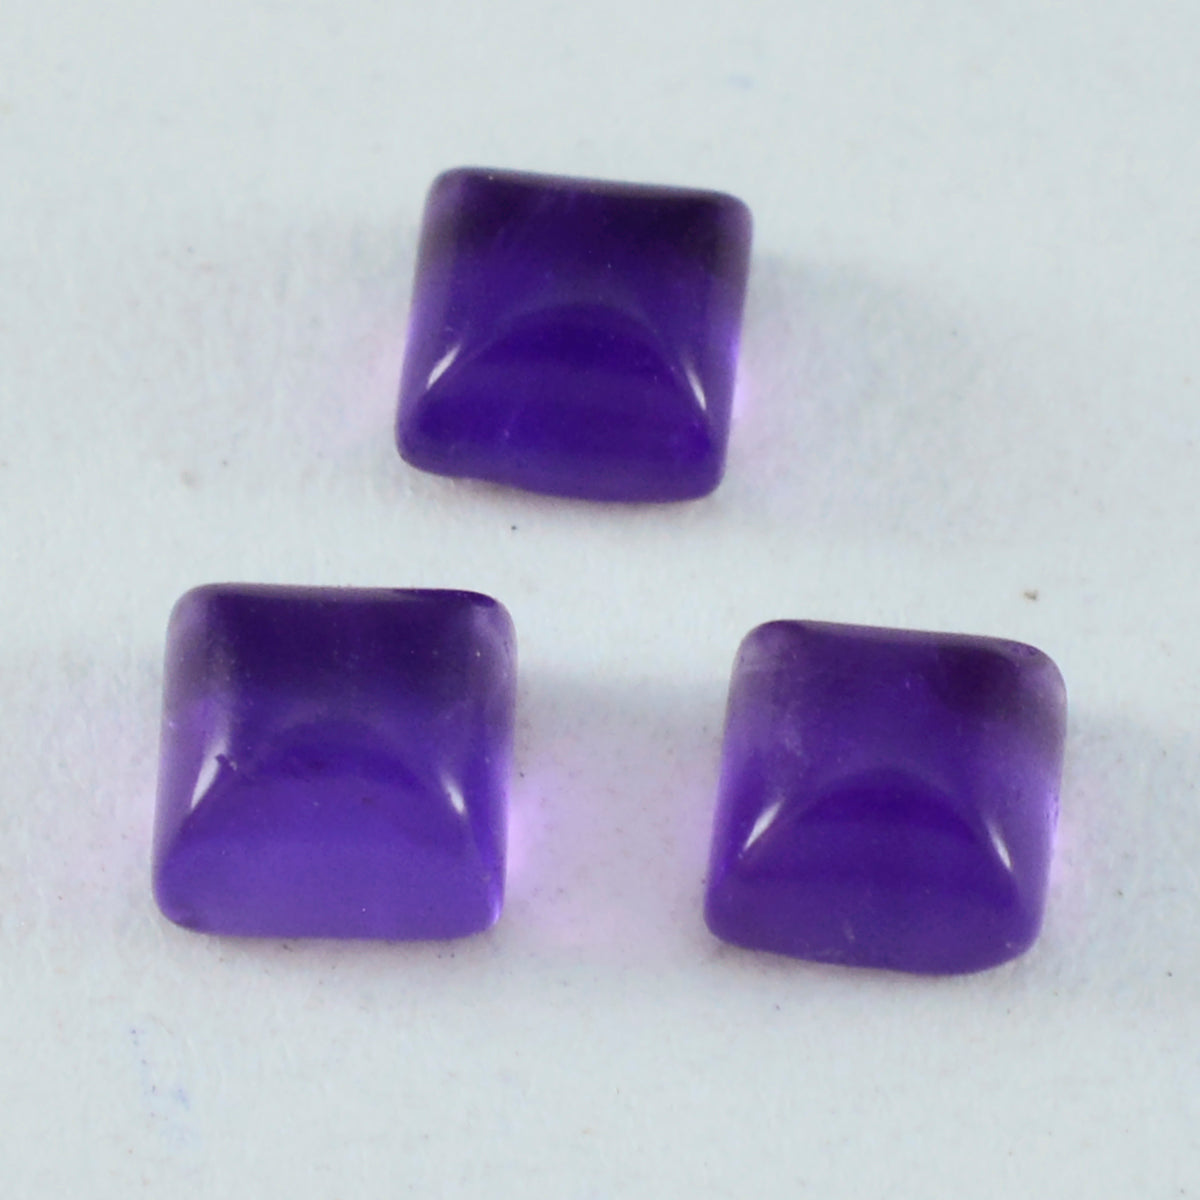 Riyogems 1PC Purple Amethyst Cabochon 8x8 mm Square Shape pretty Quality Gemstone